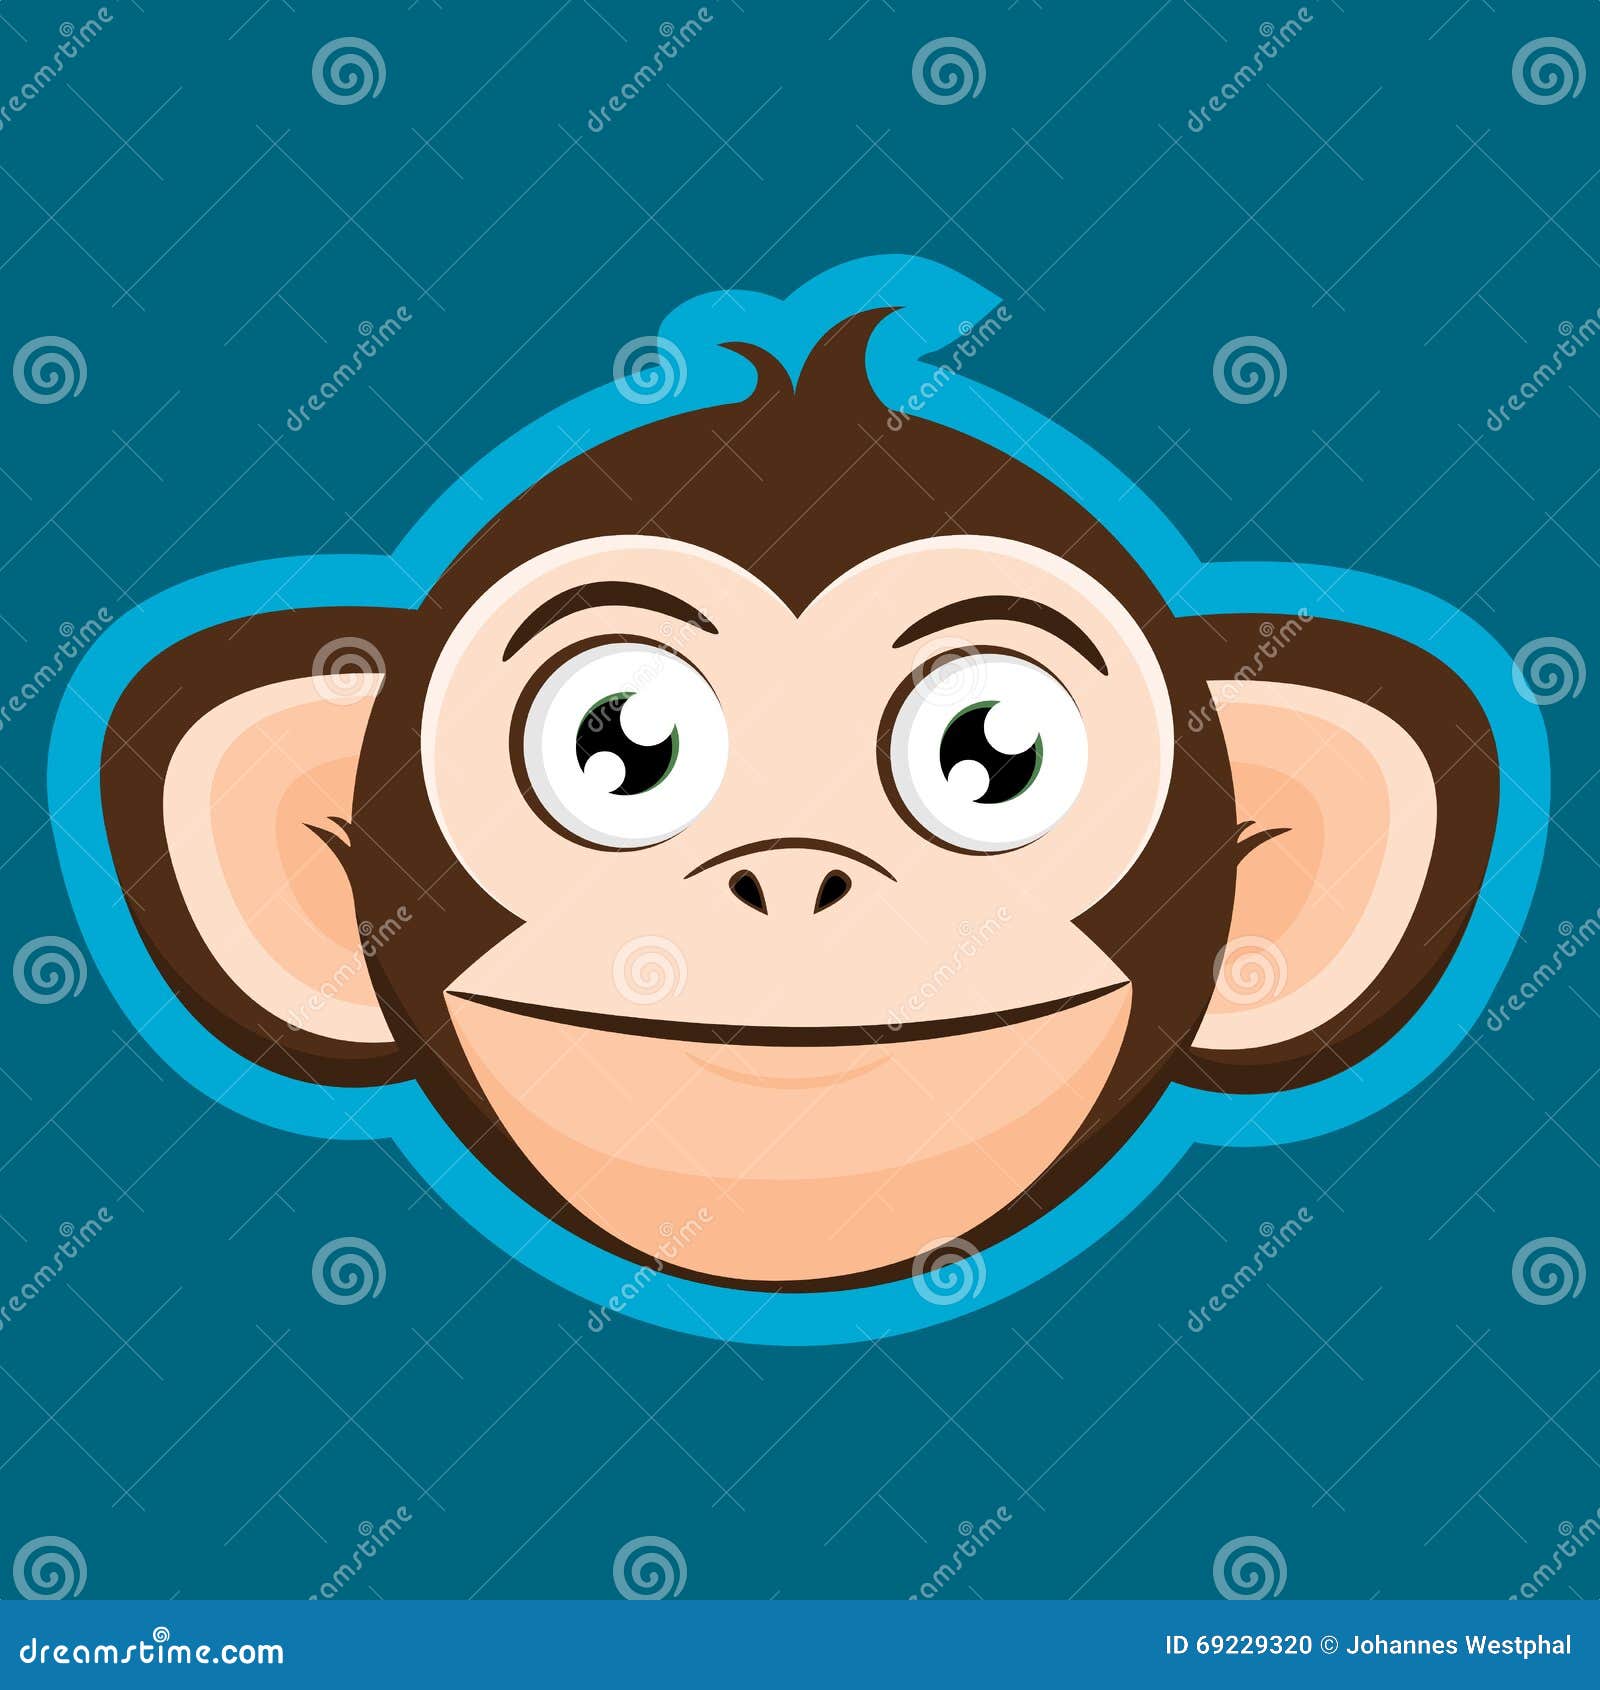 Smiling Happy Monkey Ape Head Cartoon Stock Vector - Illustration of face,  adventure: 69229320